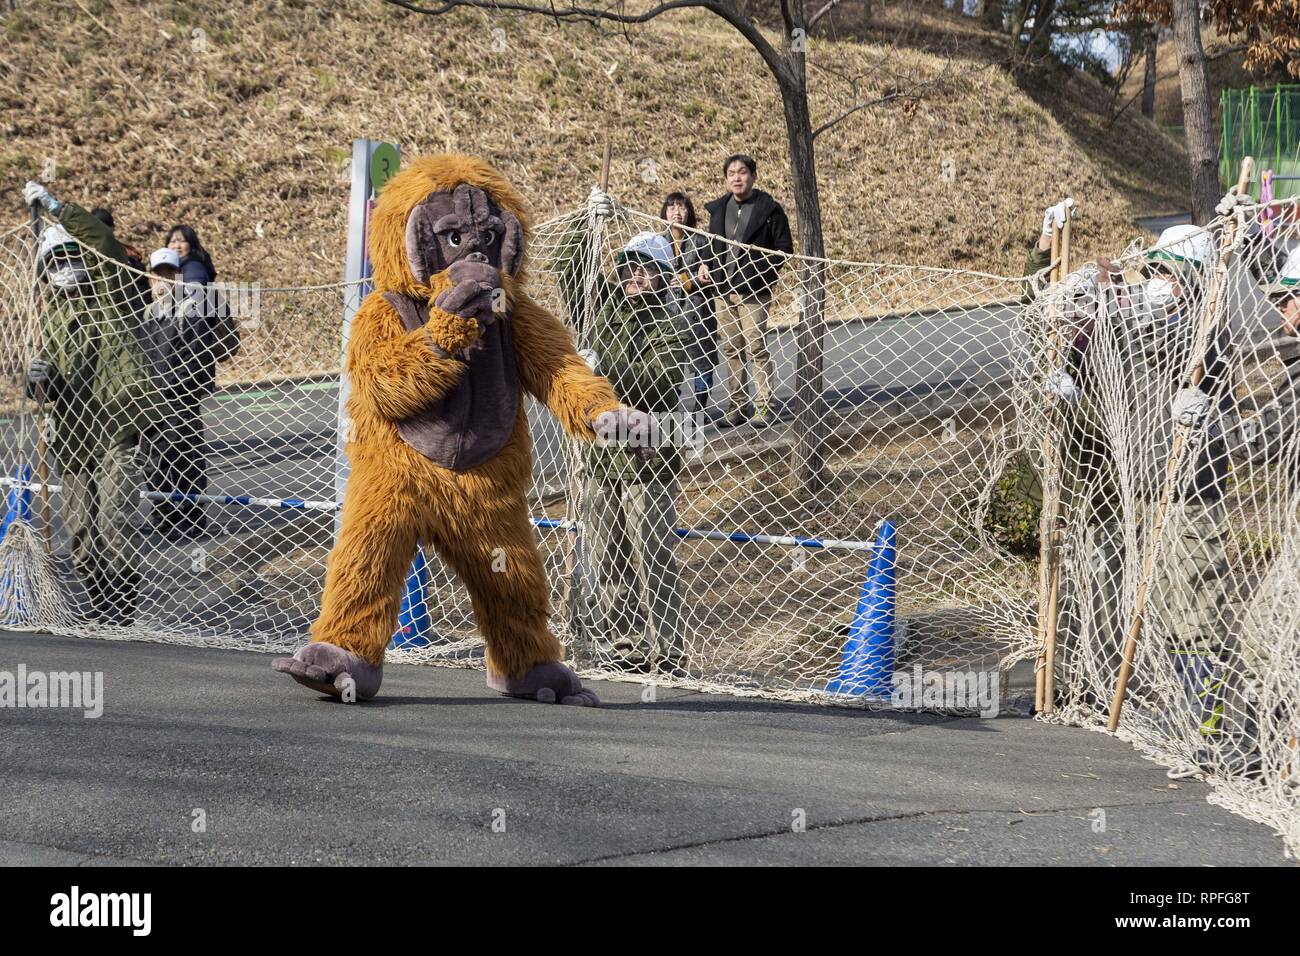 Tokyo, Japan. 22nd Feb, 2019. A zookeeper wearing orangutan